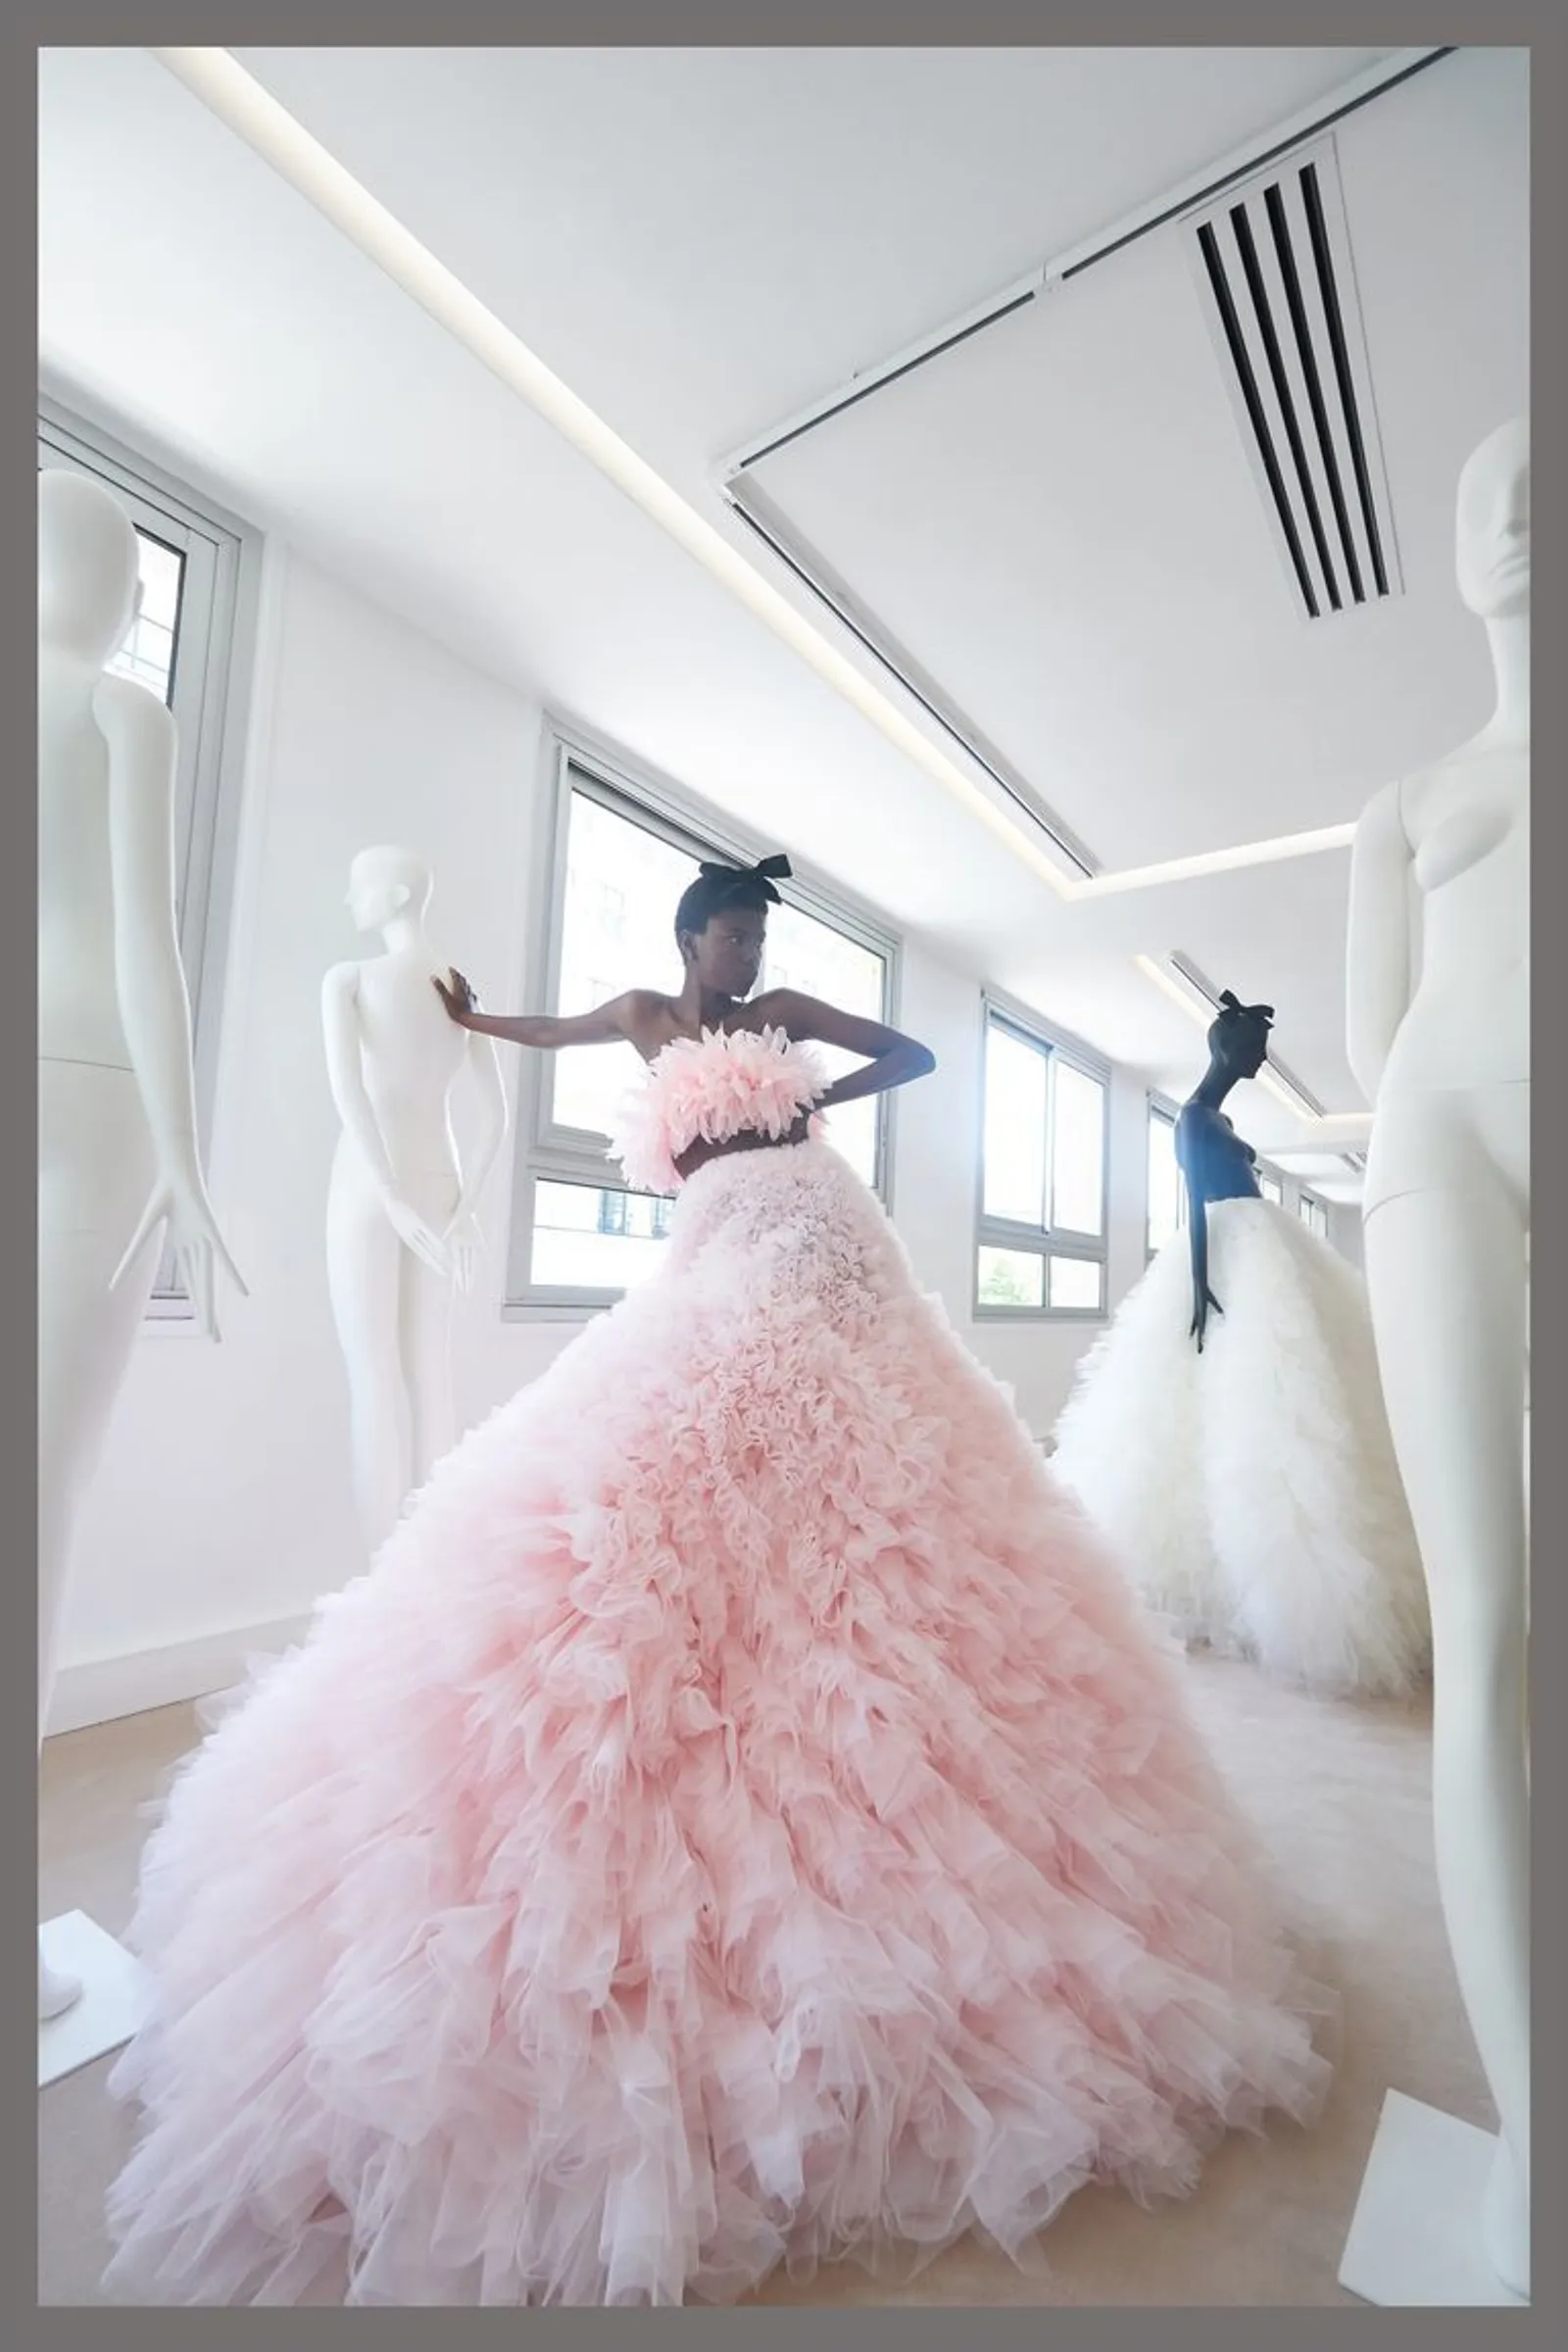 Gaun Telanjang hingga Gaun Mirip Awan Ada di Koleksi Couture Fall 2019